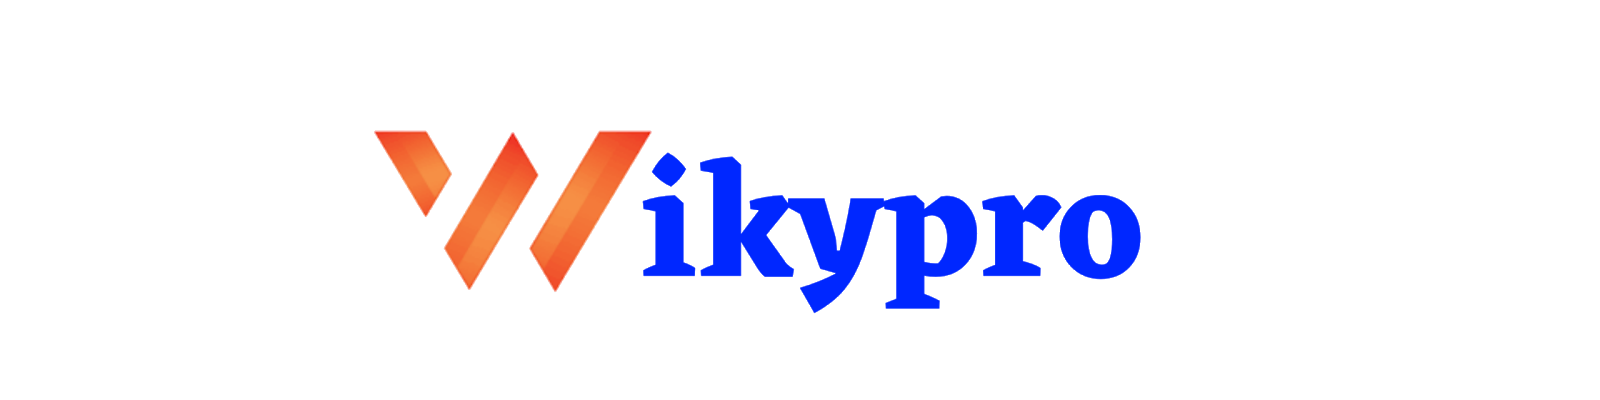 Wikypro